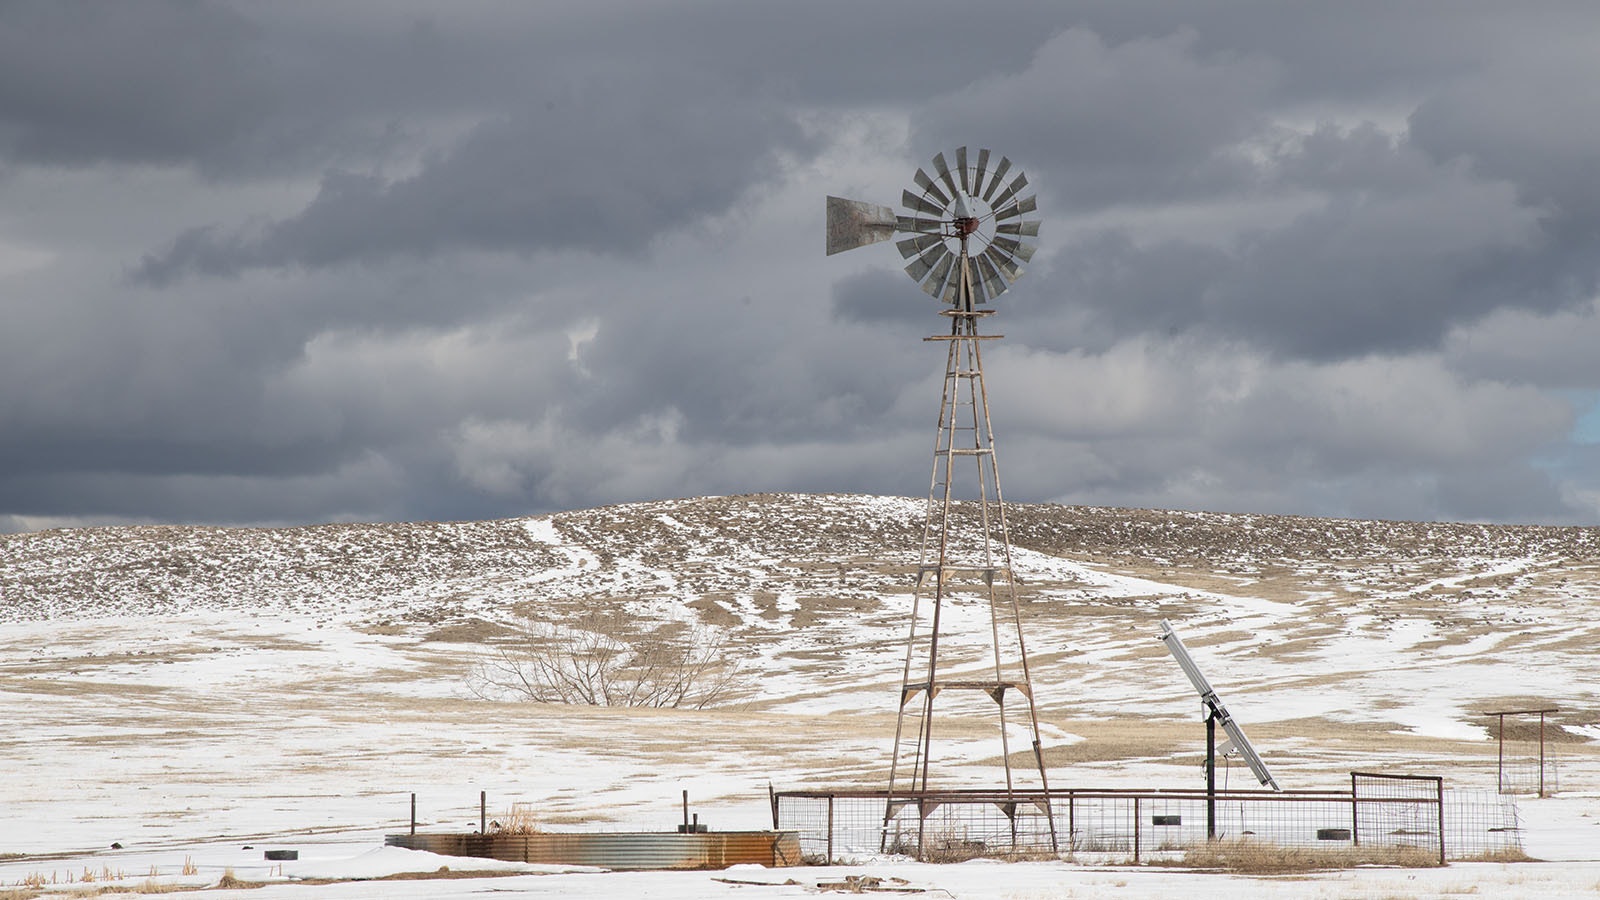 Rural scene snow windmill 5 17 24